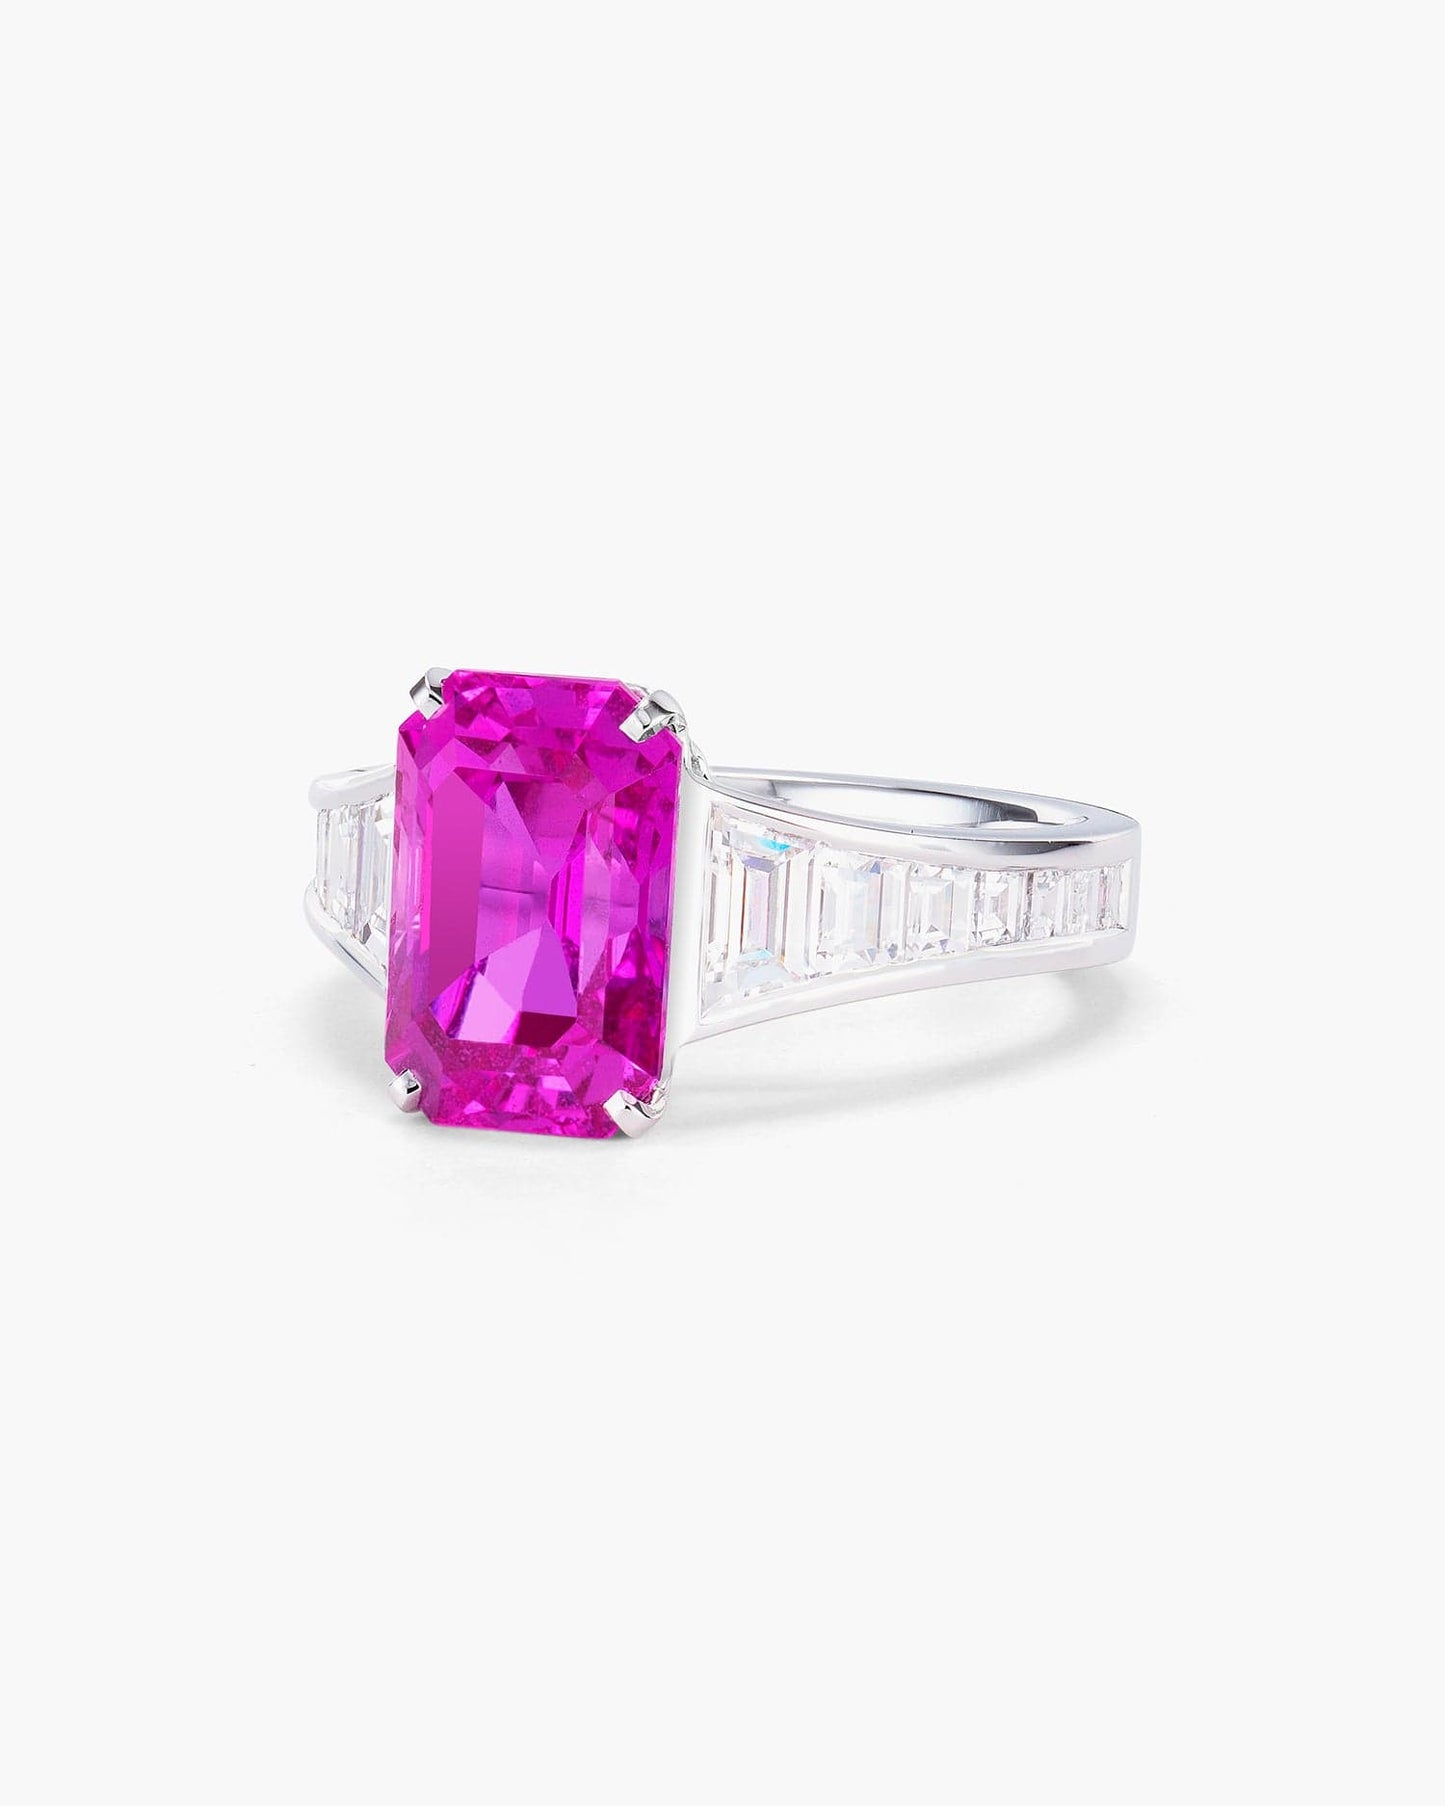 4.31 carat Emerald Cut Madagascar Pink Sapphire and Diamond Ring